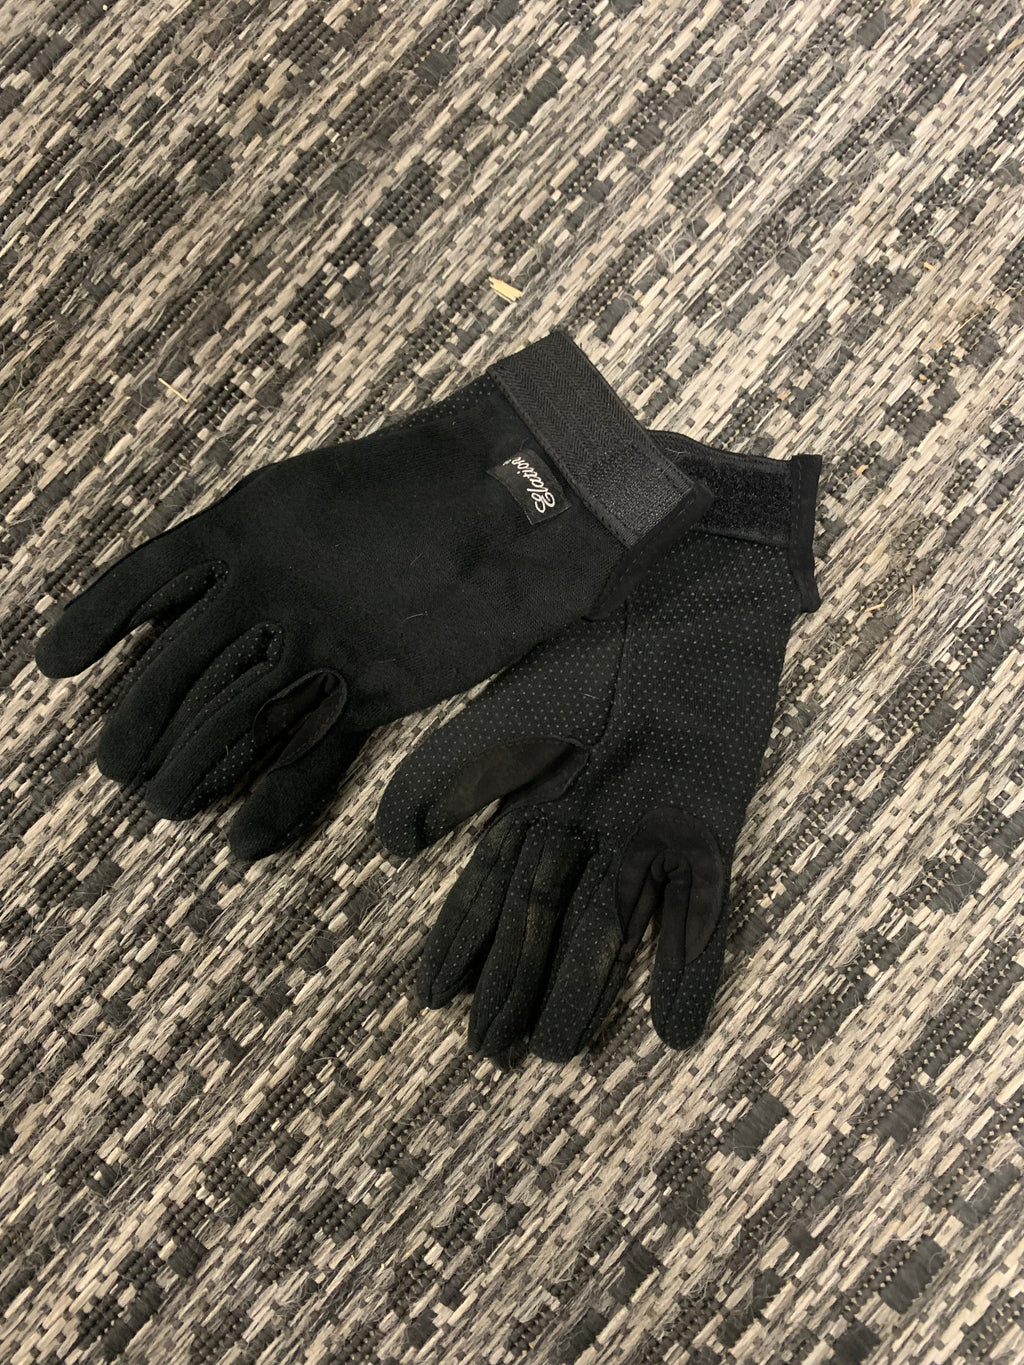 Elation gloves